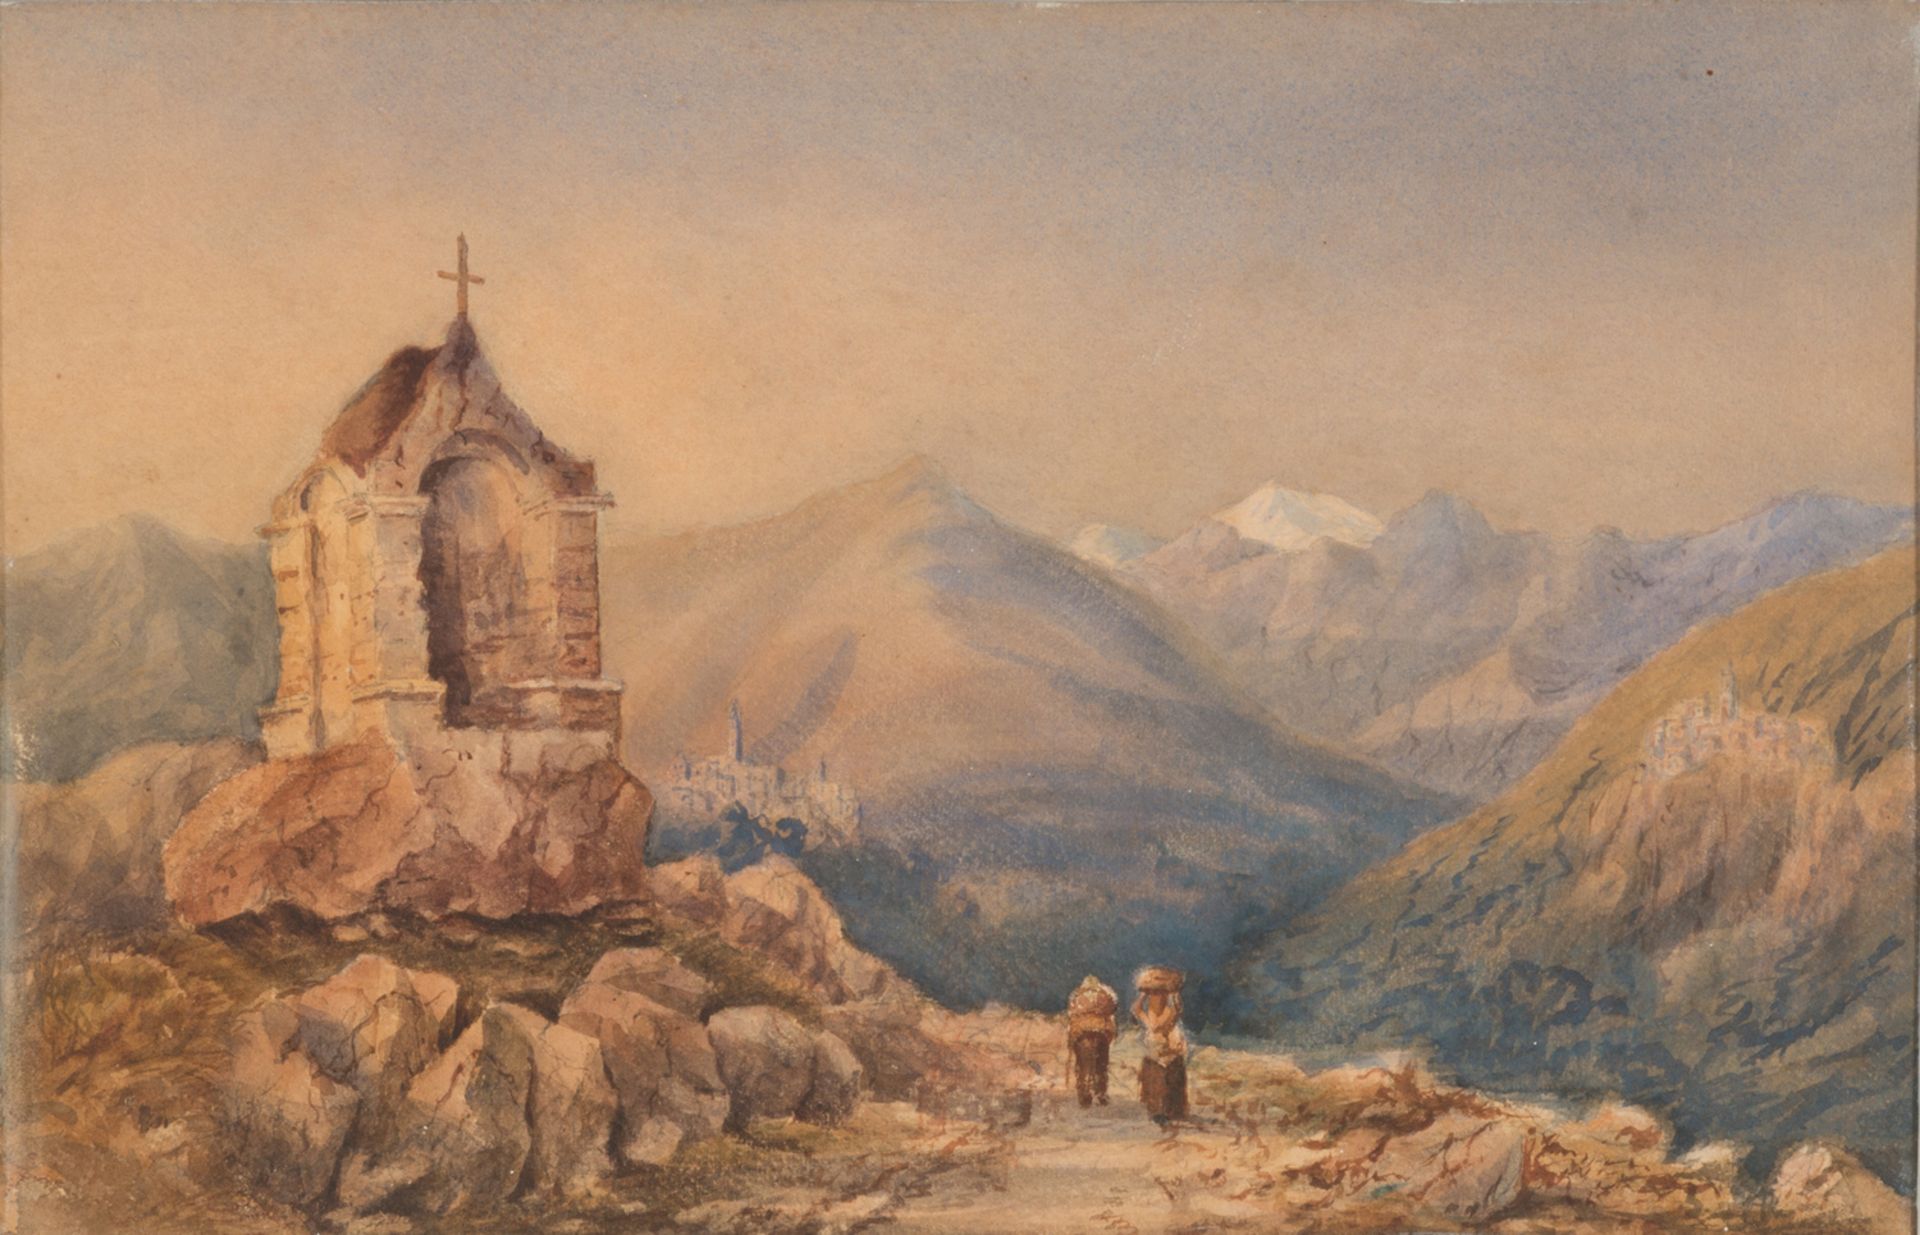 WATERCOLOR OF ALPINE LANDSCAPE 19TH CENTURY